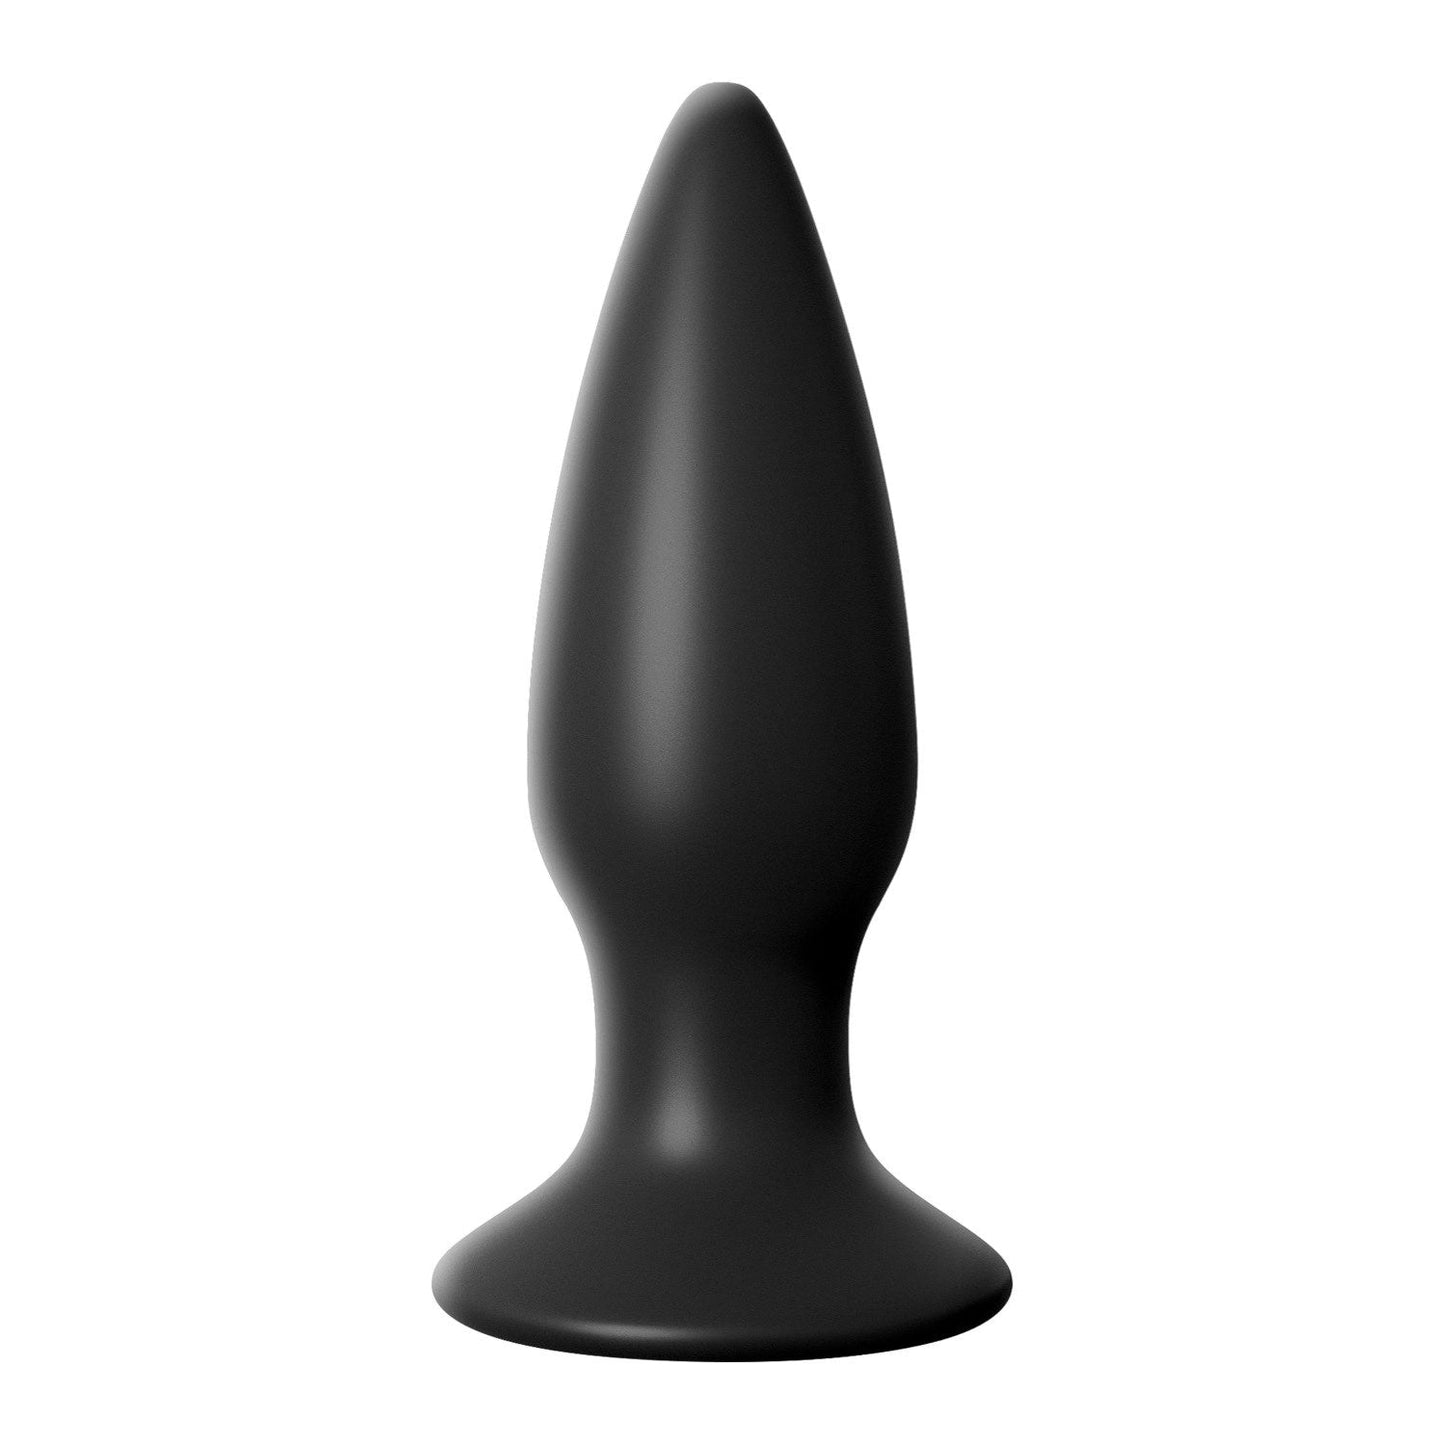 Collection 小型可充电肛门塞 - 黑色 10.9 厘米（4.3 英寸）USB 可充电振动对接塞